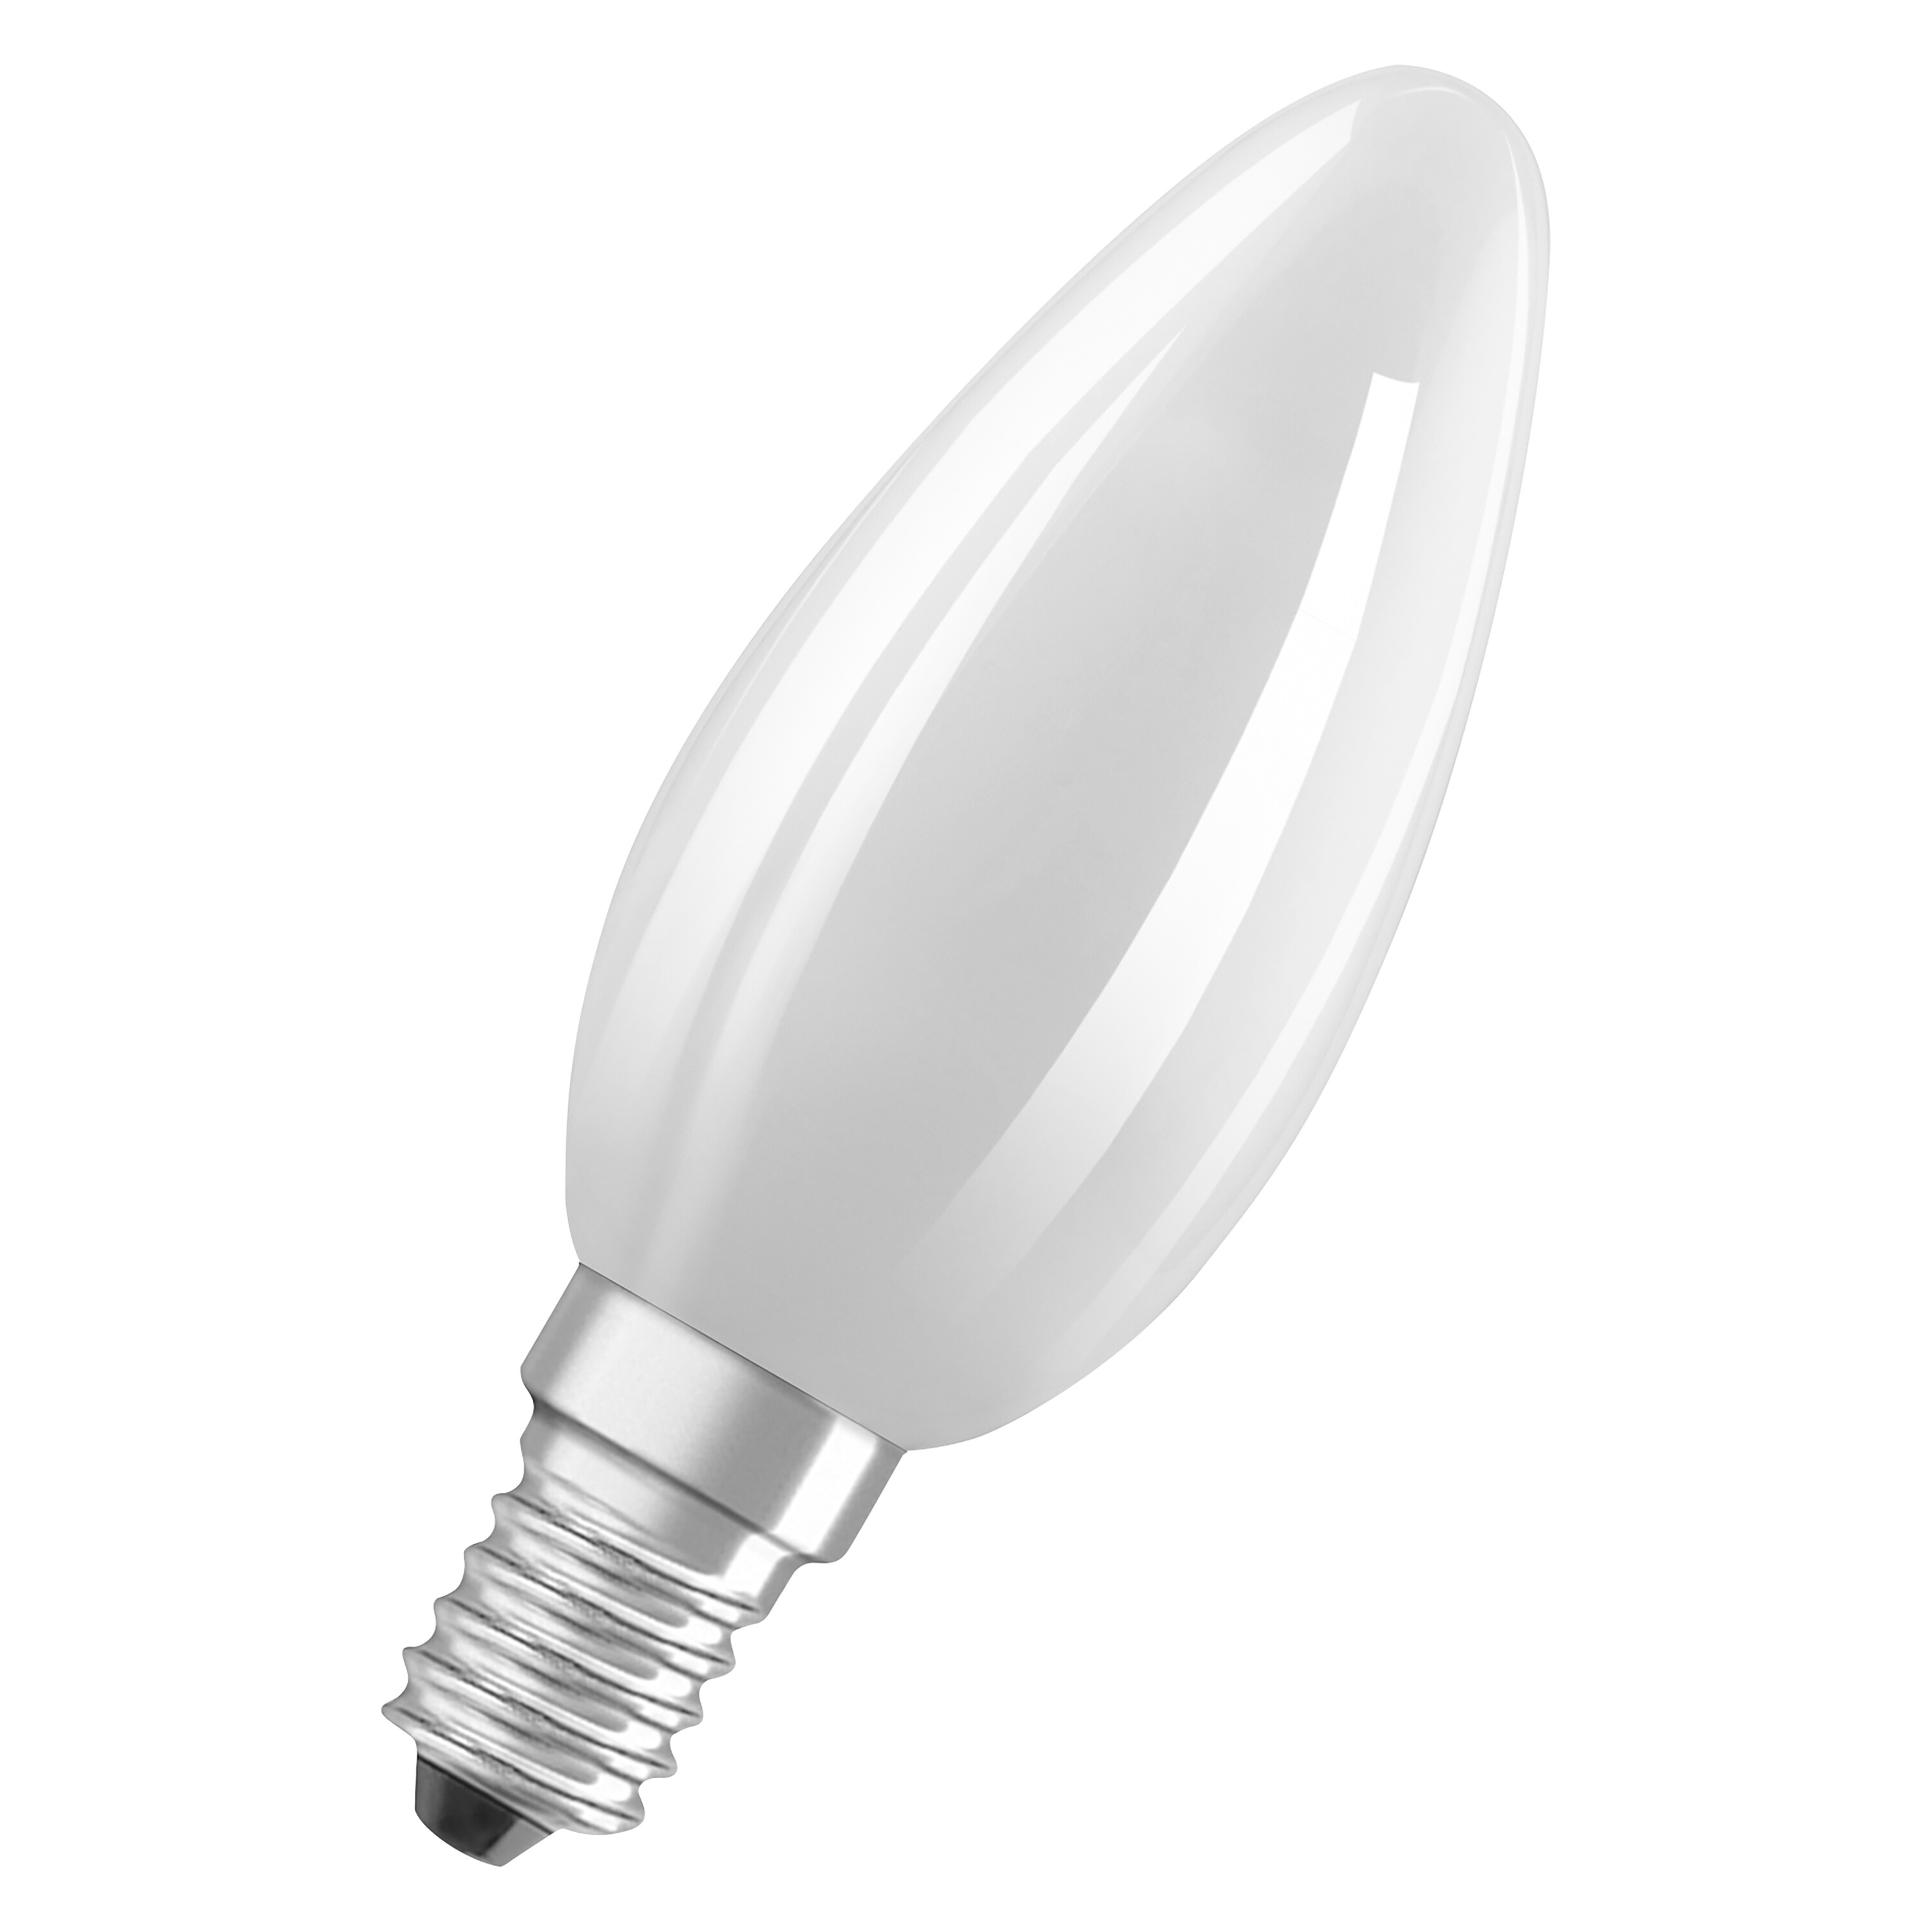 OSRAM  LED Retrofit CLASSIC LED 806 Lampe B Warmweiß Lumen